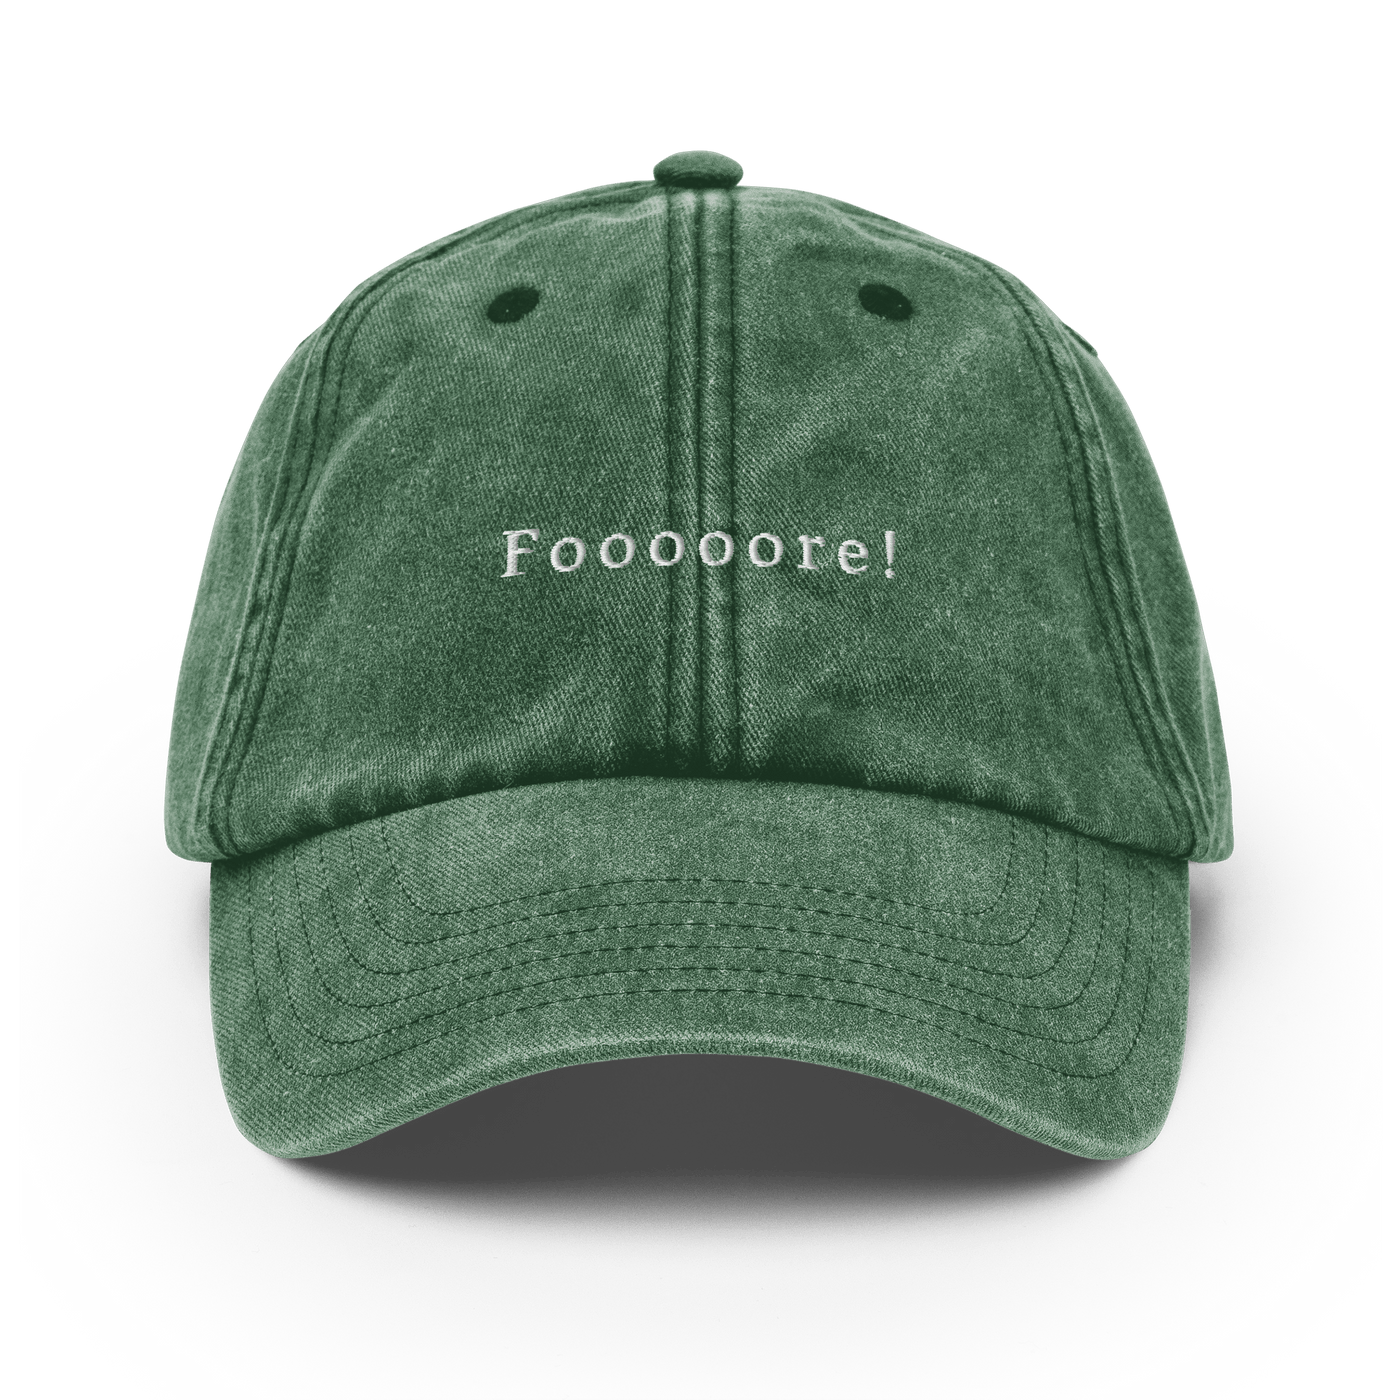 Fooooore! Vintage Hat - Vintage Bottle Green - - Just Another Cap Store